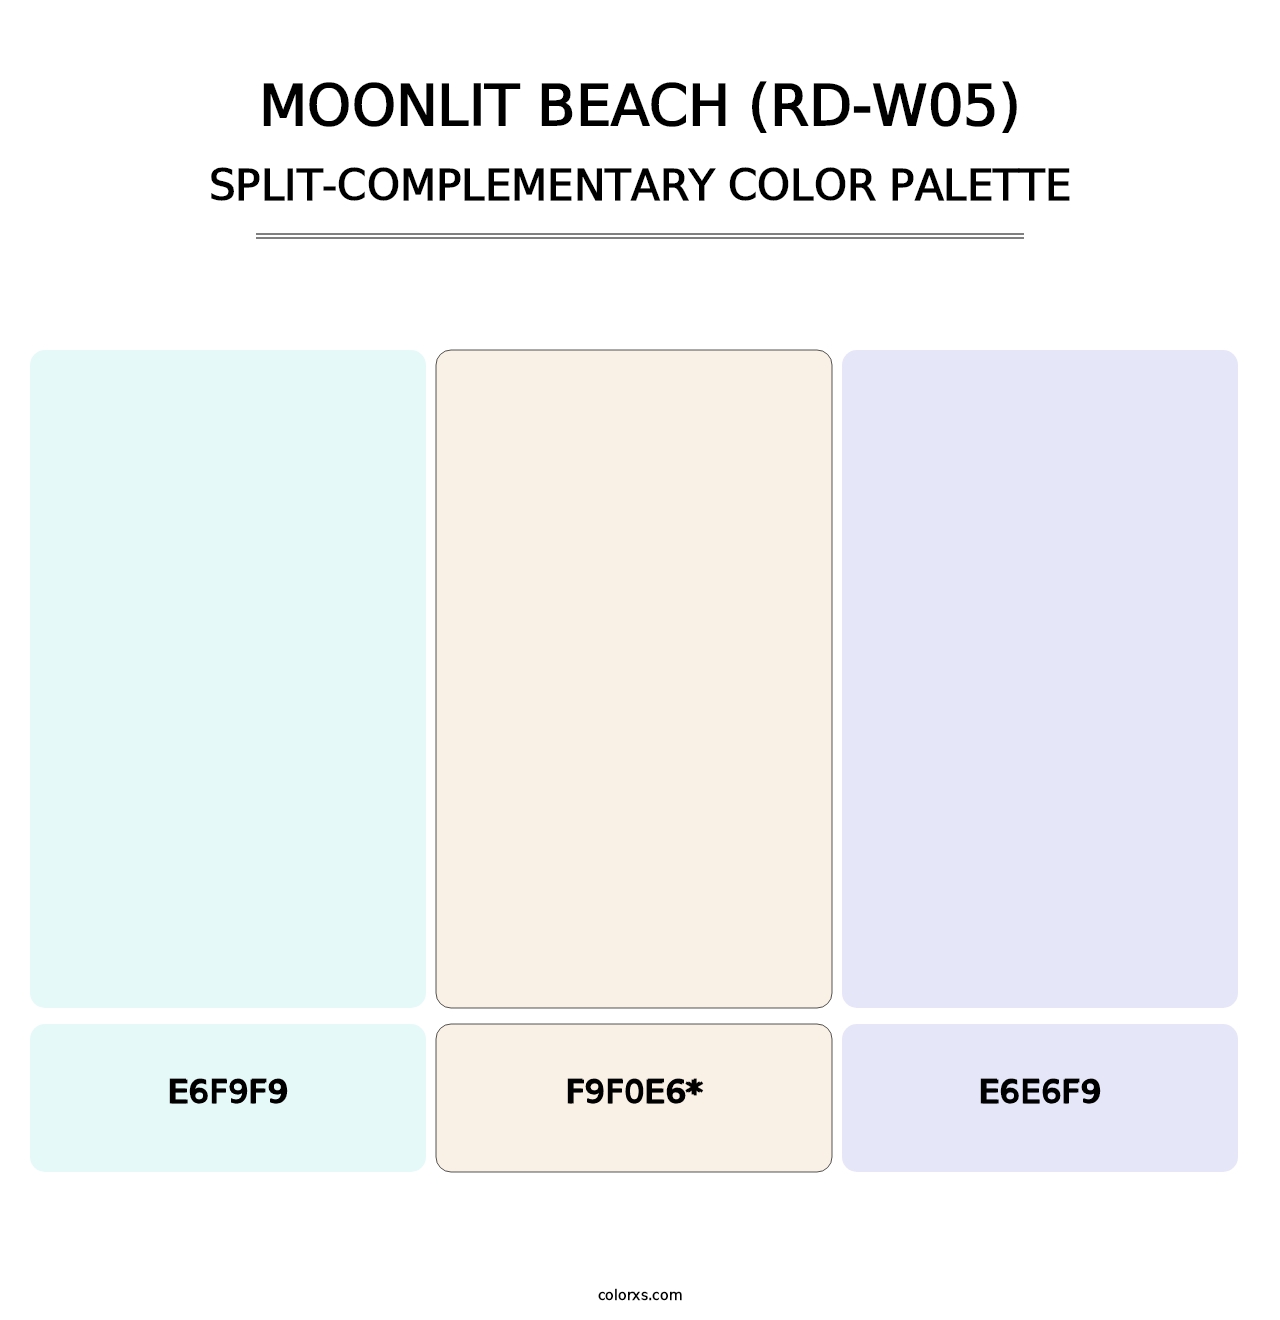 Moonlit Beach (RD-W05) - Split-Complementary Color Palette